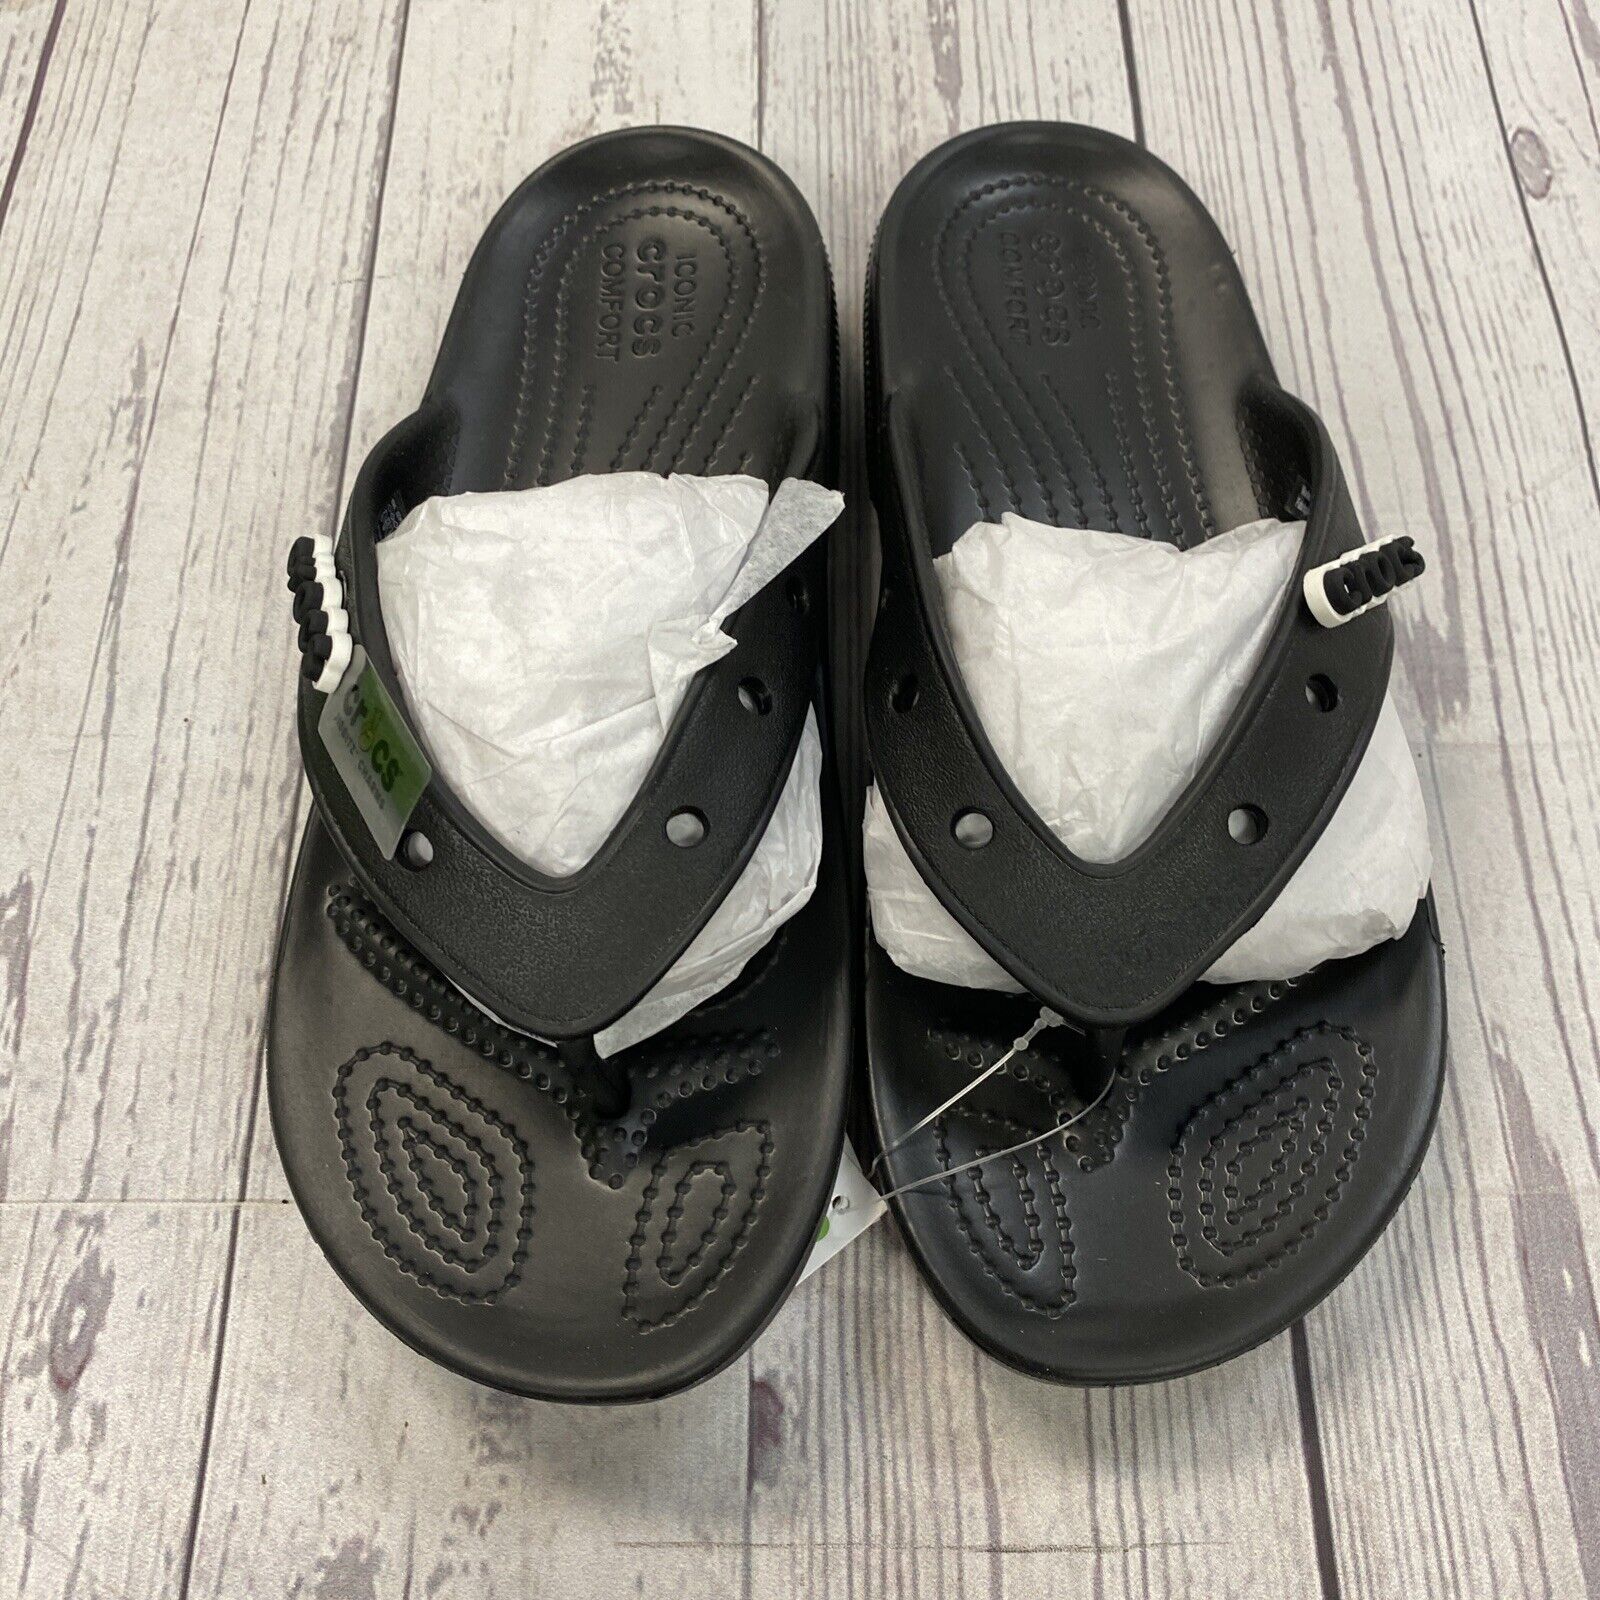 Crocs Swiftwater size 8 Iconic Comfort Sandals Shoes Womans Slip